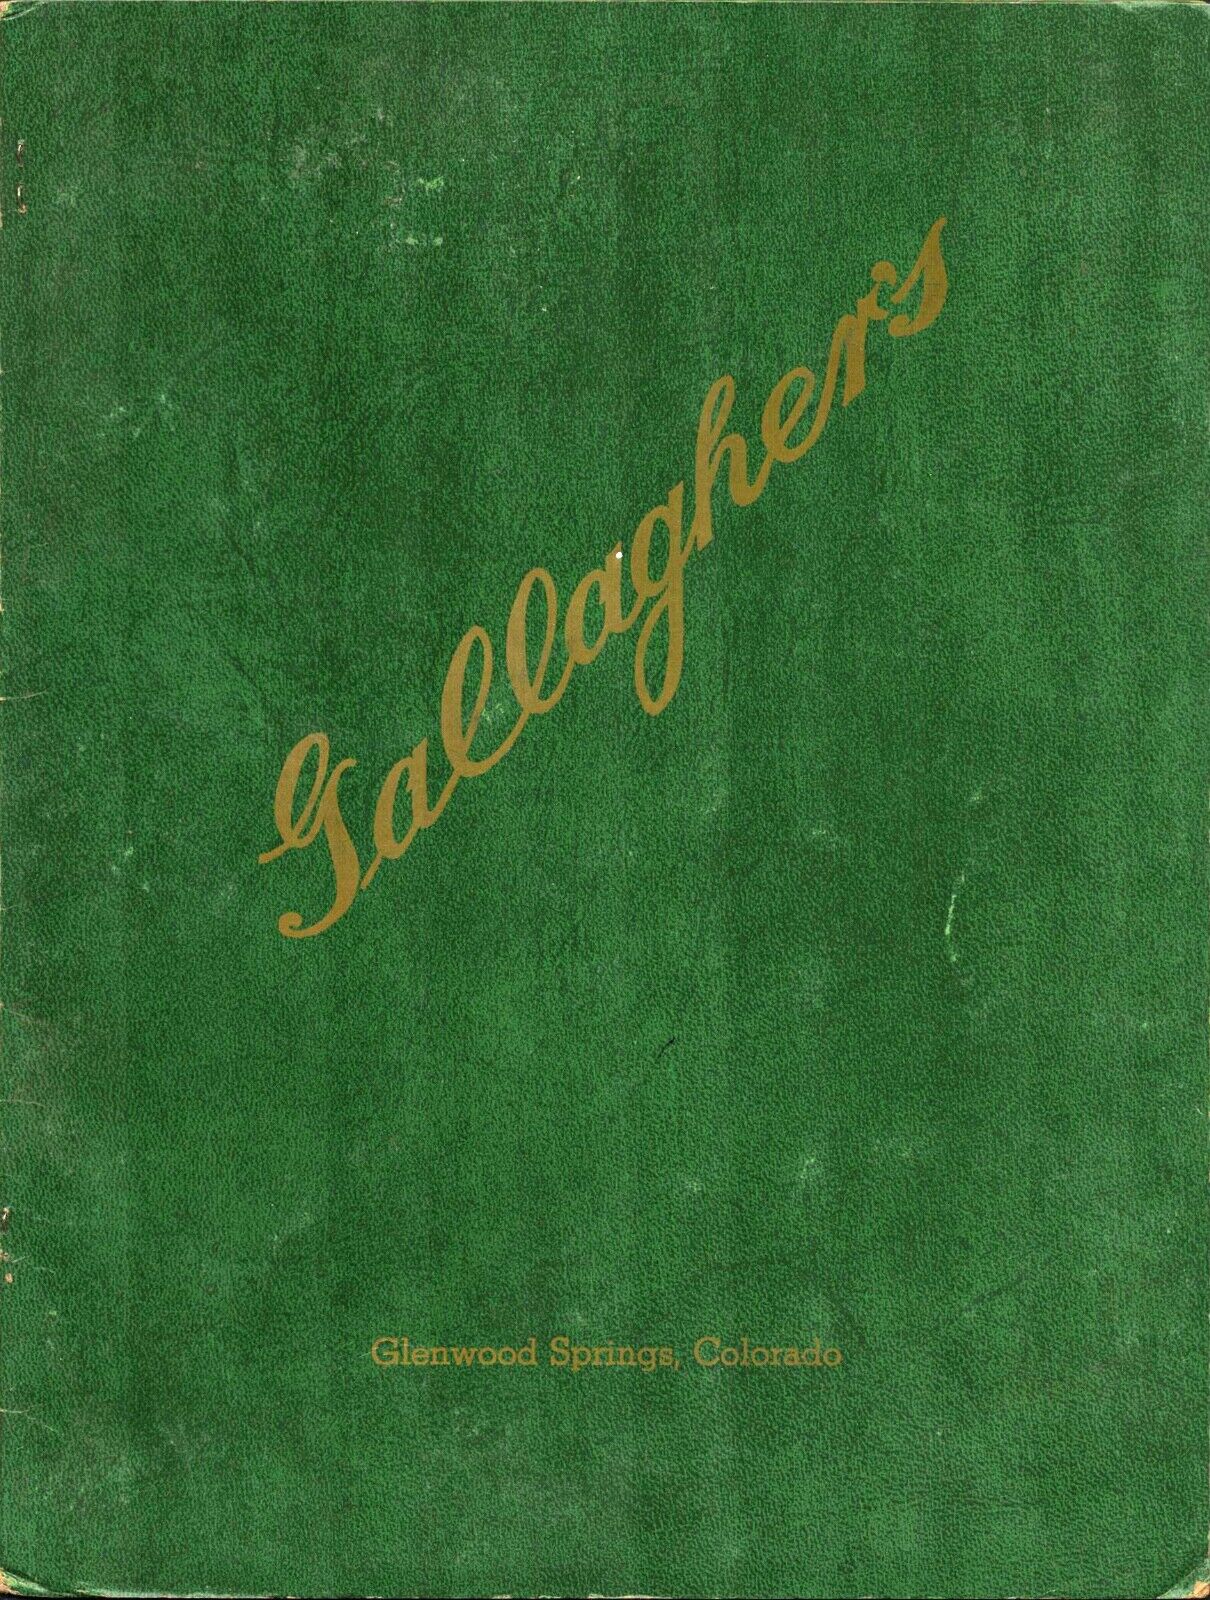 1970s GALLAGHER'S vintage restaurant dinner menu GLENWOOD SPRINGS, COLORADO